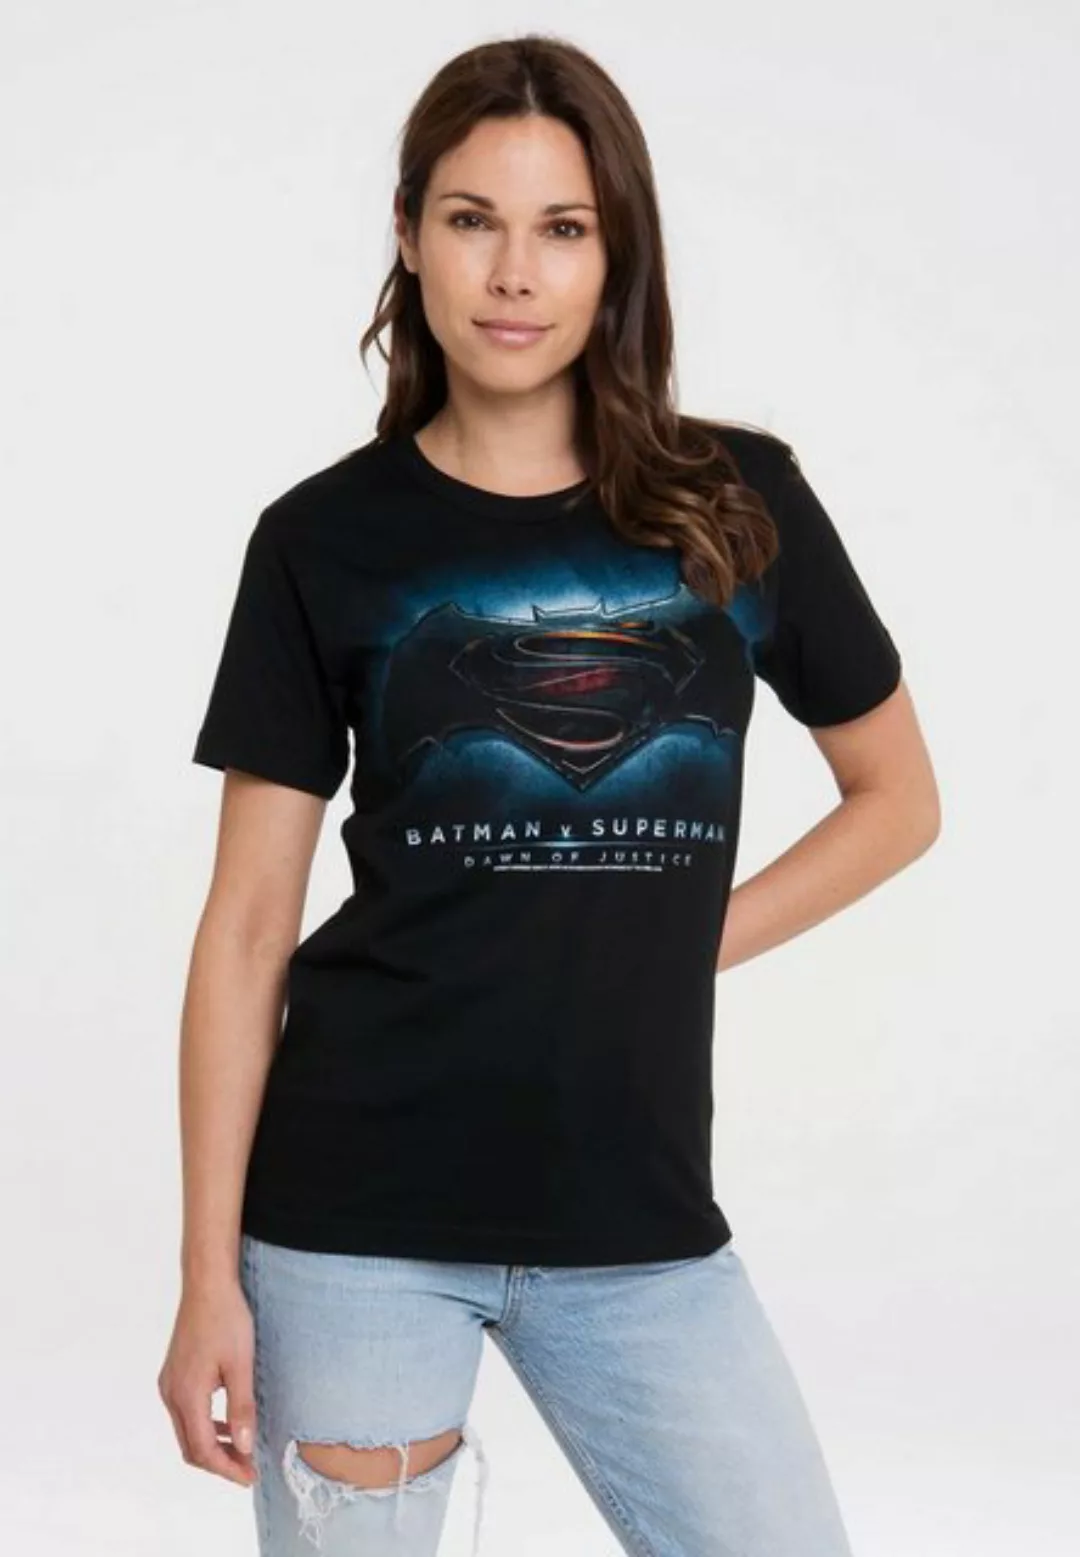 LOGOSHIRT T-Shirt Batman v Superman - Justice mit großem Superhelden-Print günstig online kaufen